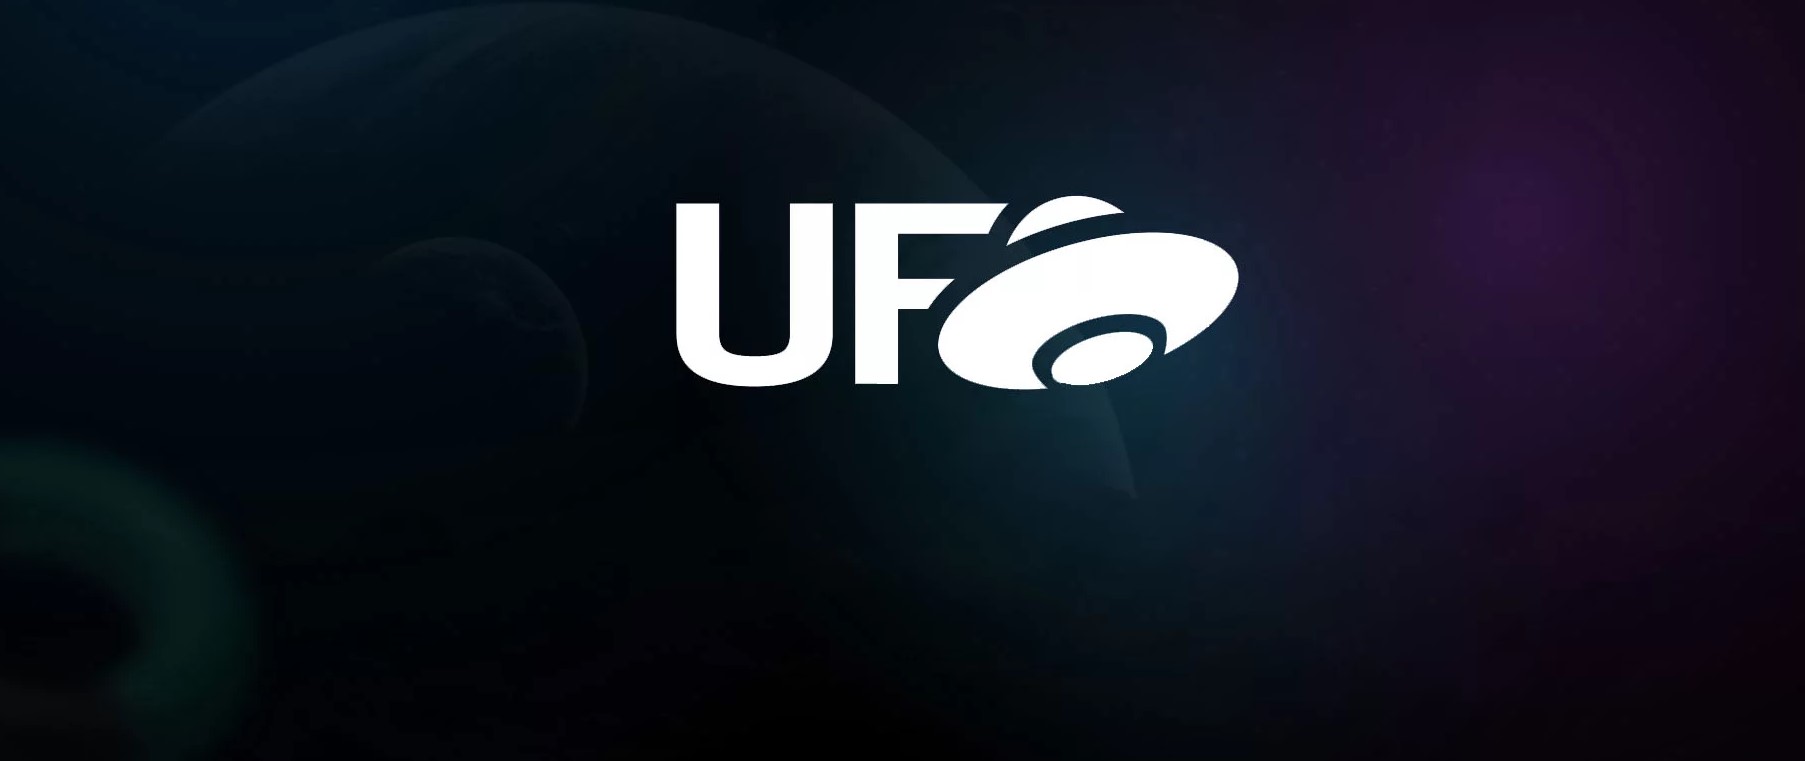  UFO Gaming (UFO) بازی مبتنی بر کریپتو